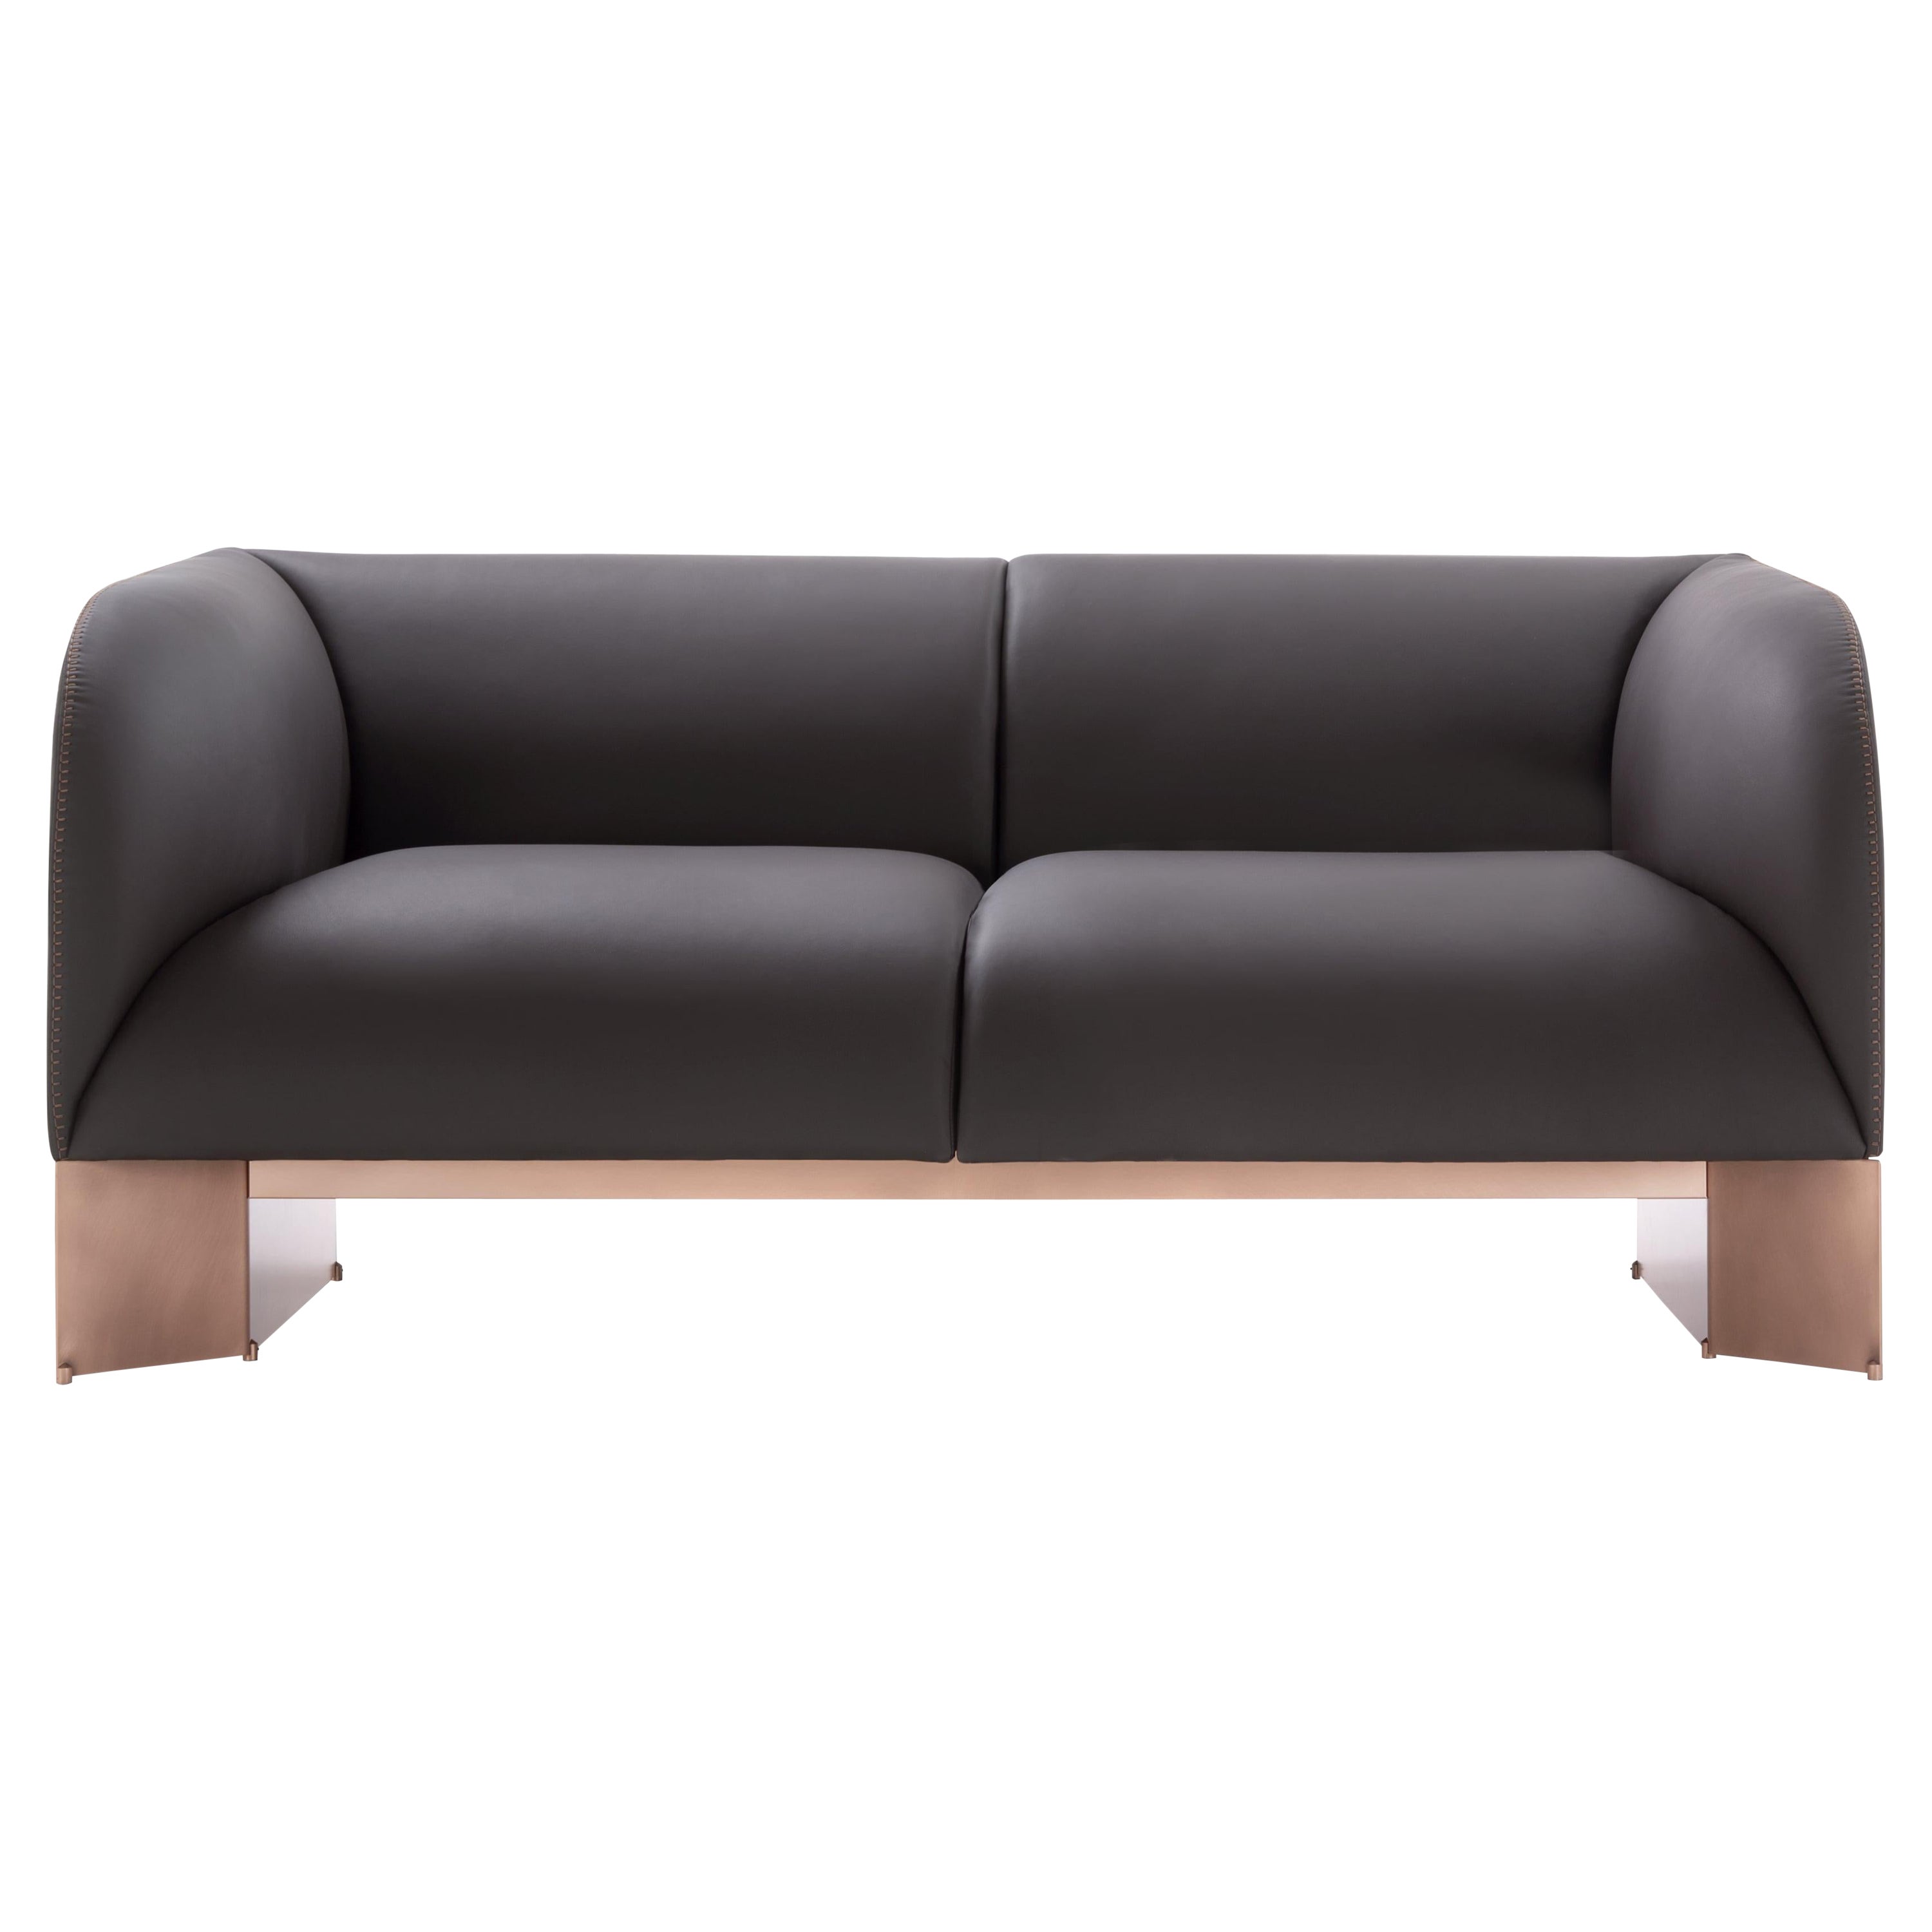 DeCastelli Caravan 2-Seat Sofa in Brushed Copper & Leather Seat by Emilio Nanni